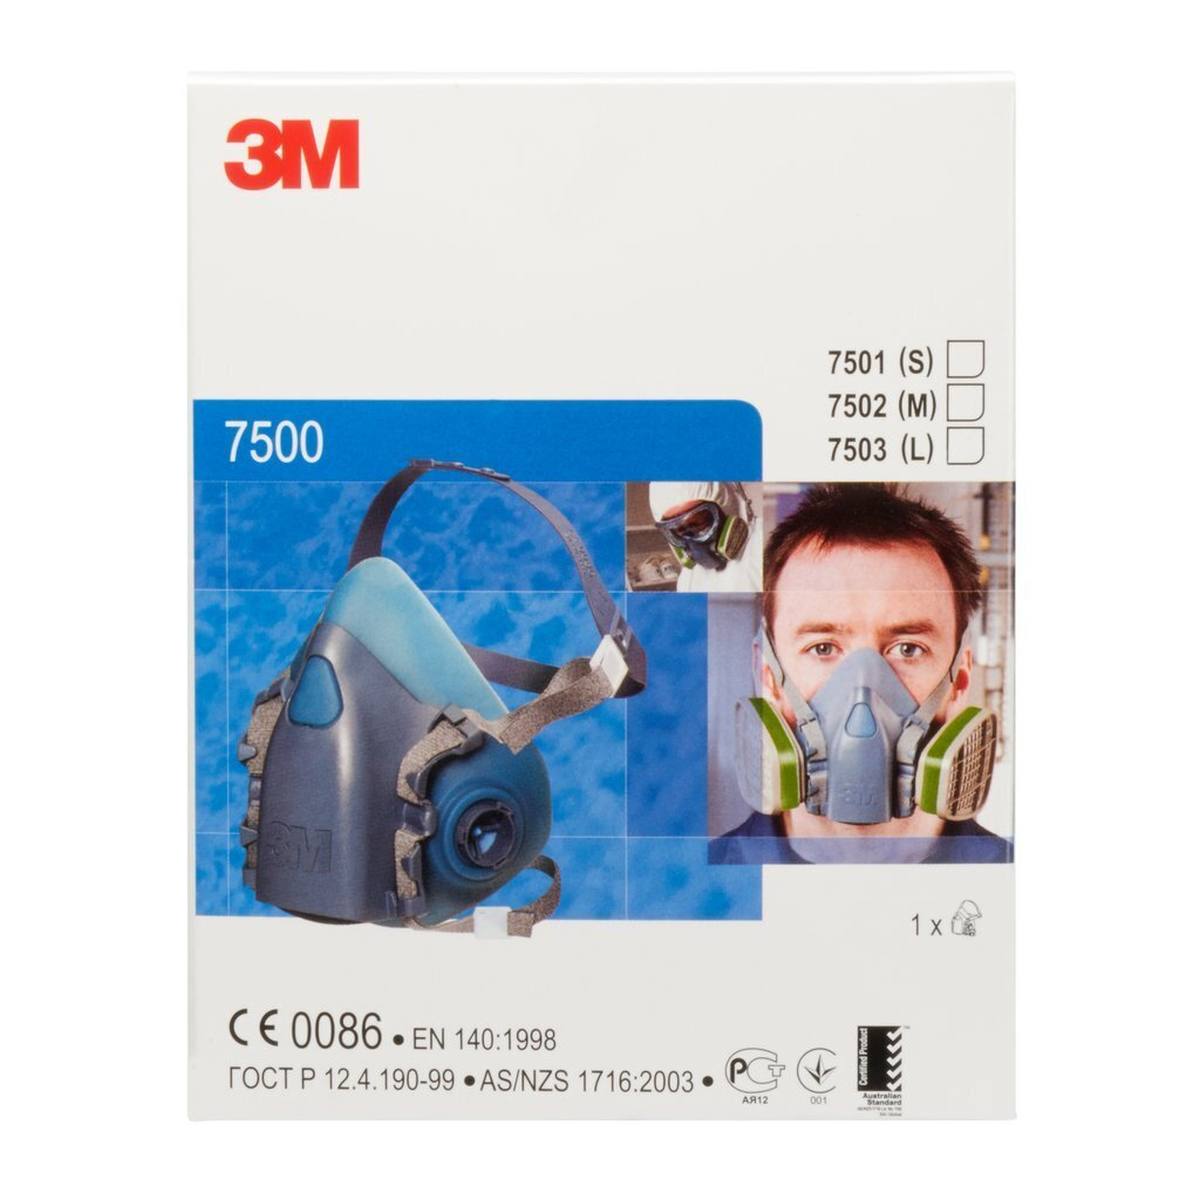 3M 7503L Demi-masque corps silicone / polyester thermoplastique taille L